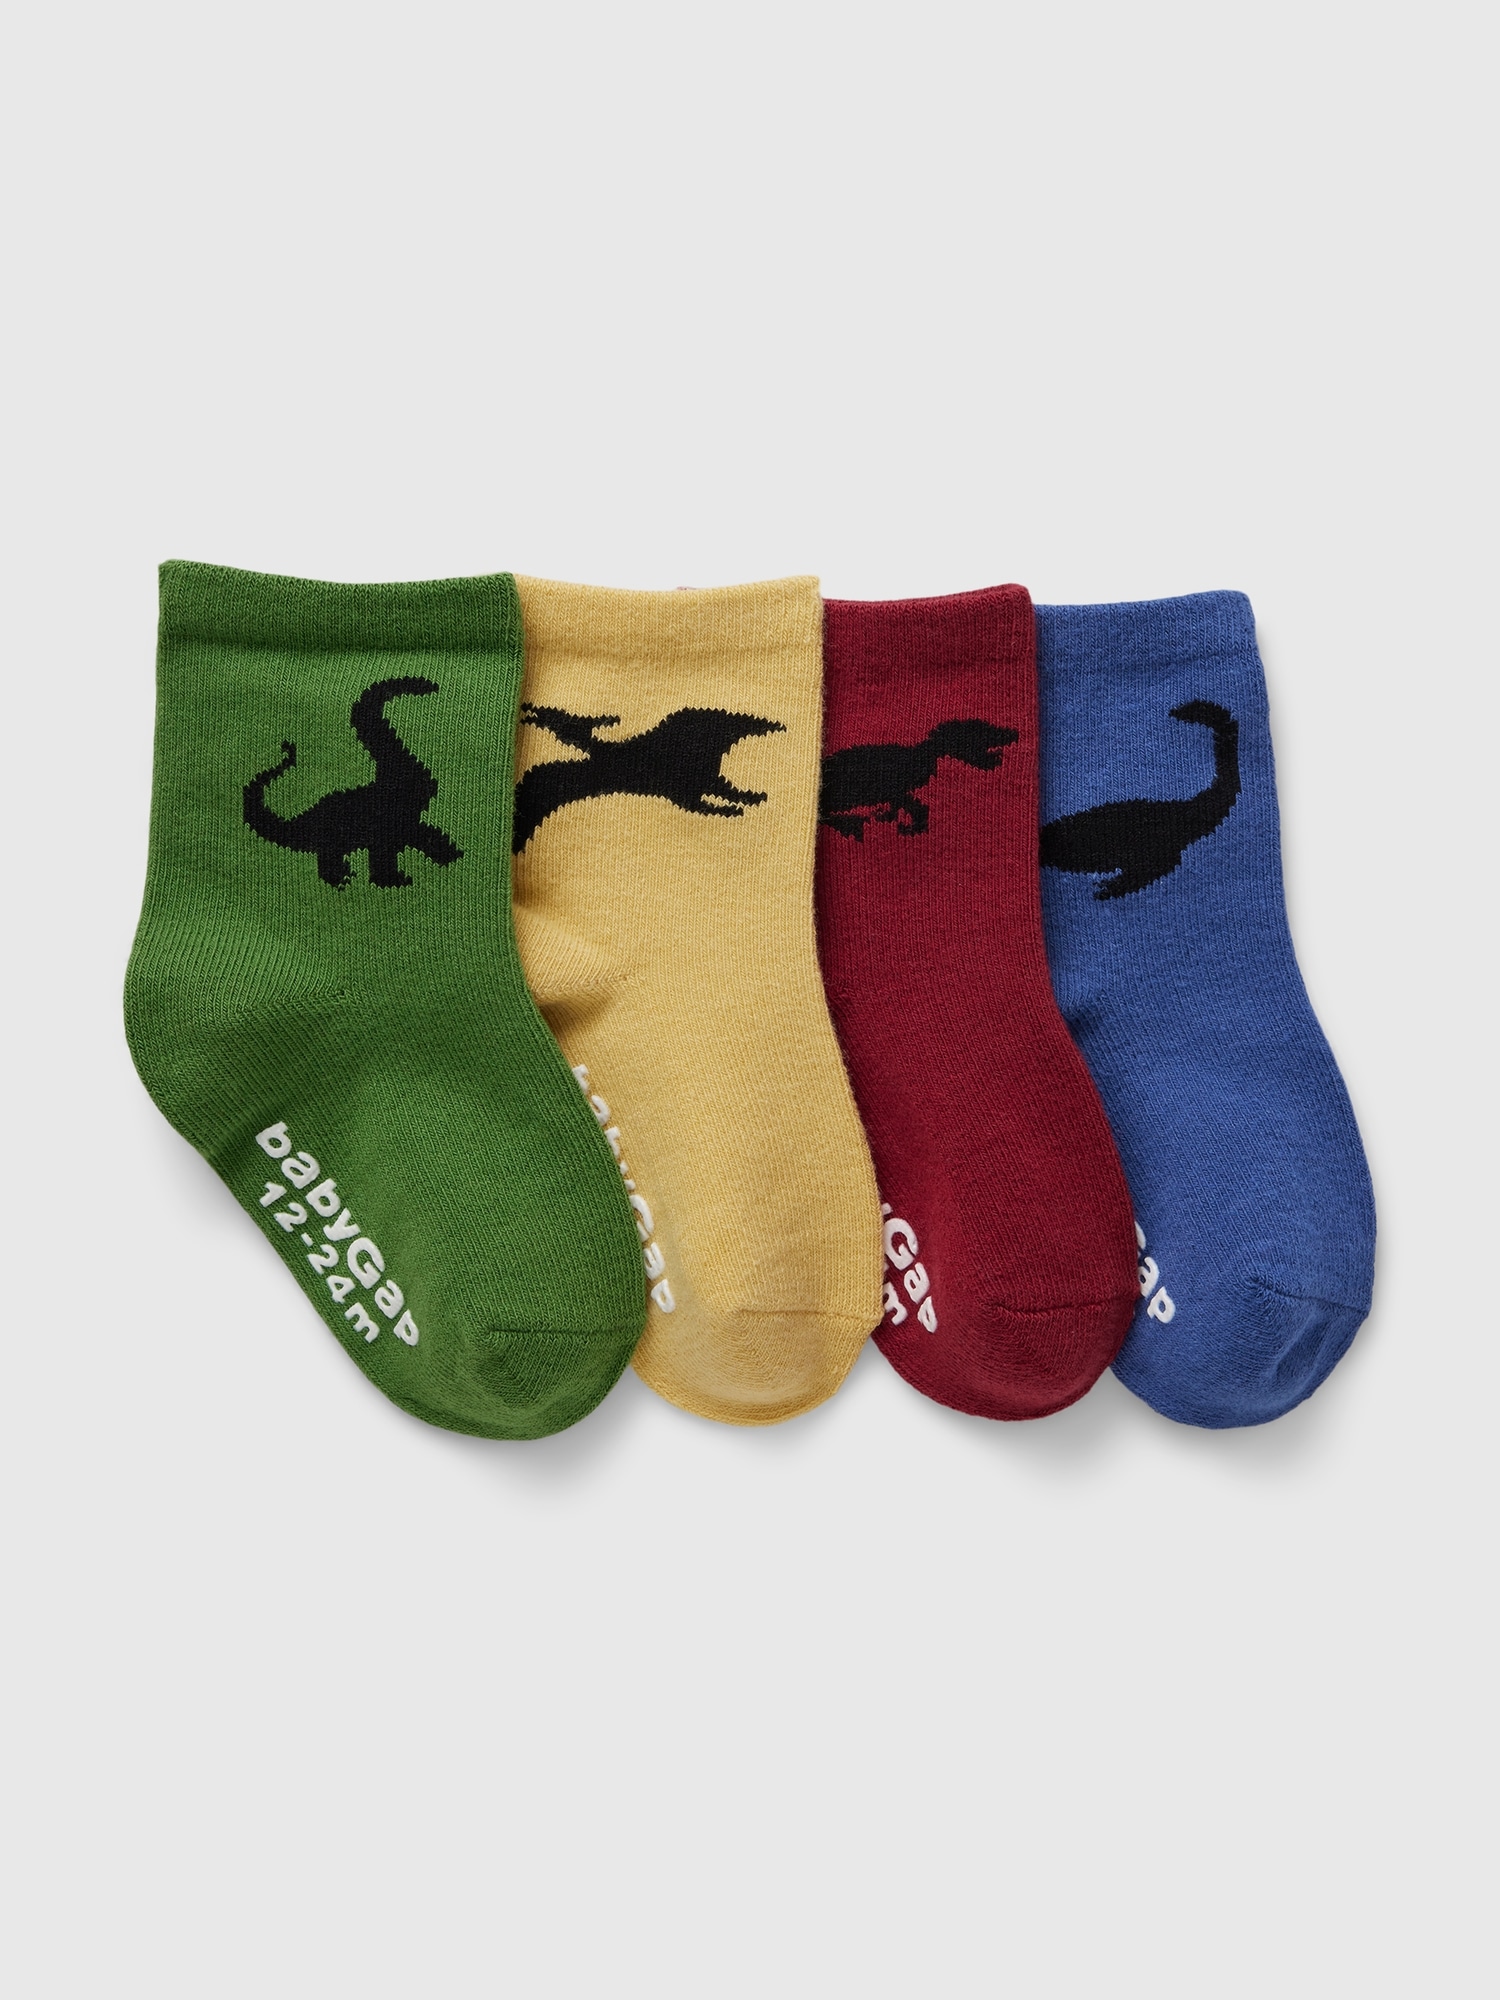 babyGap Dinosaur Crew Socks (4-Pack)